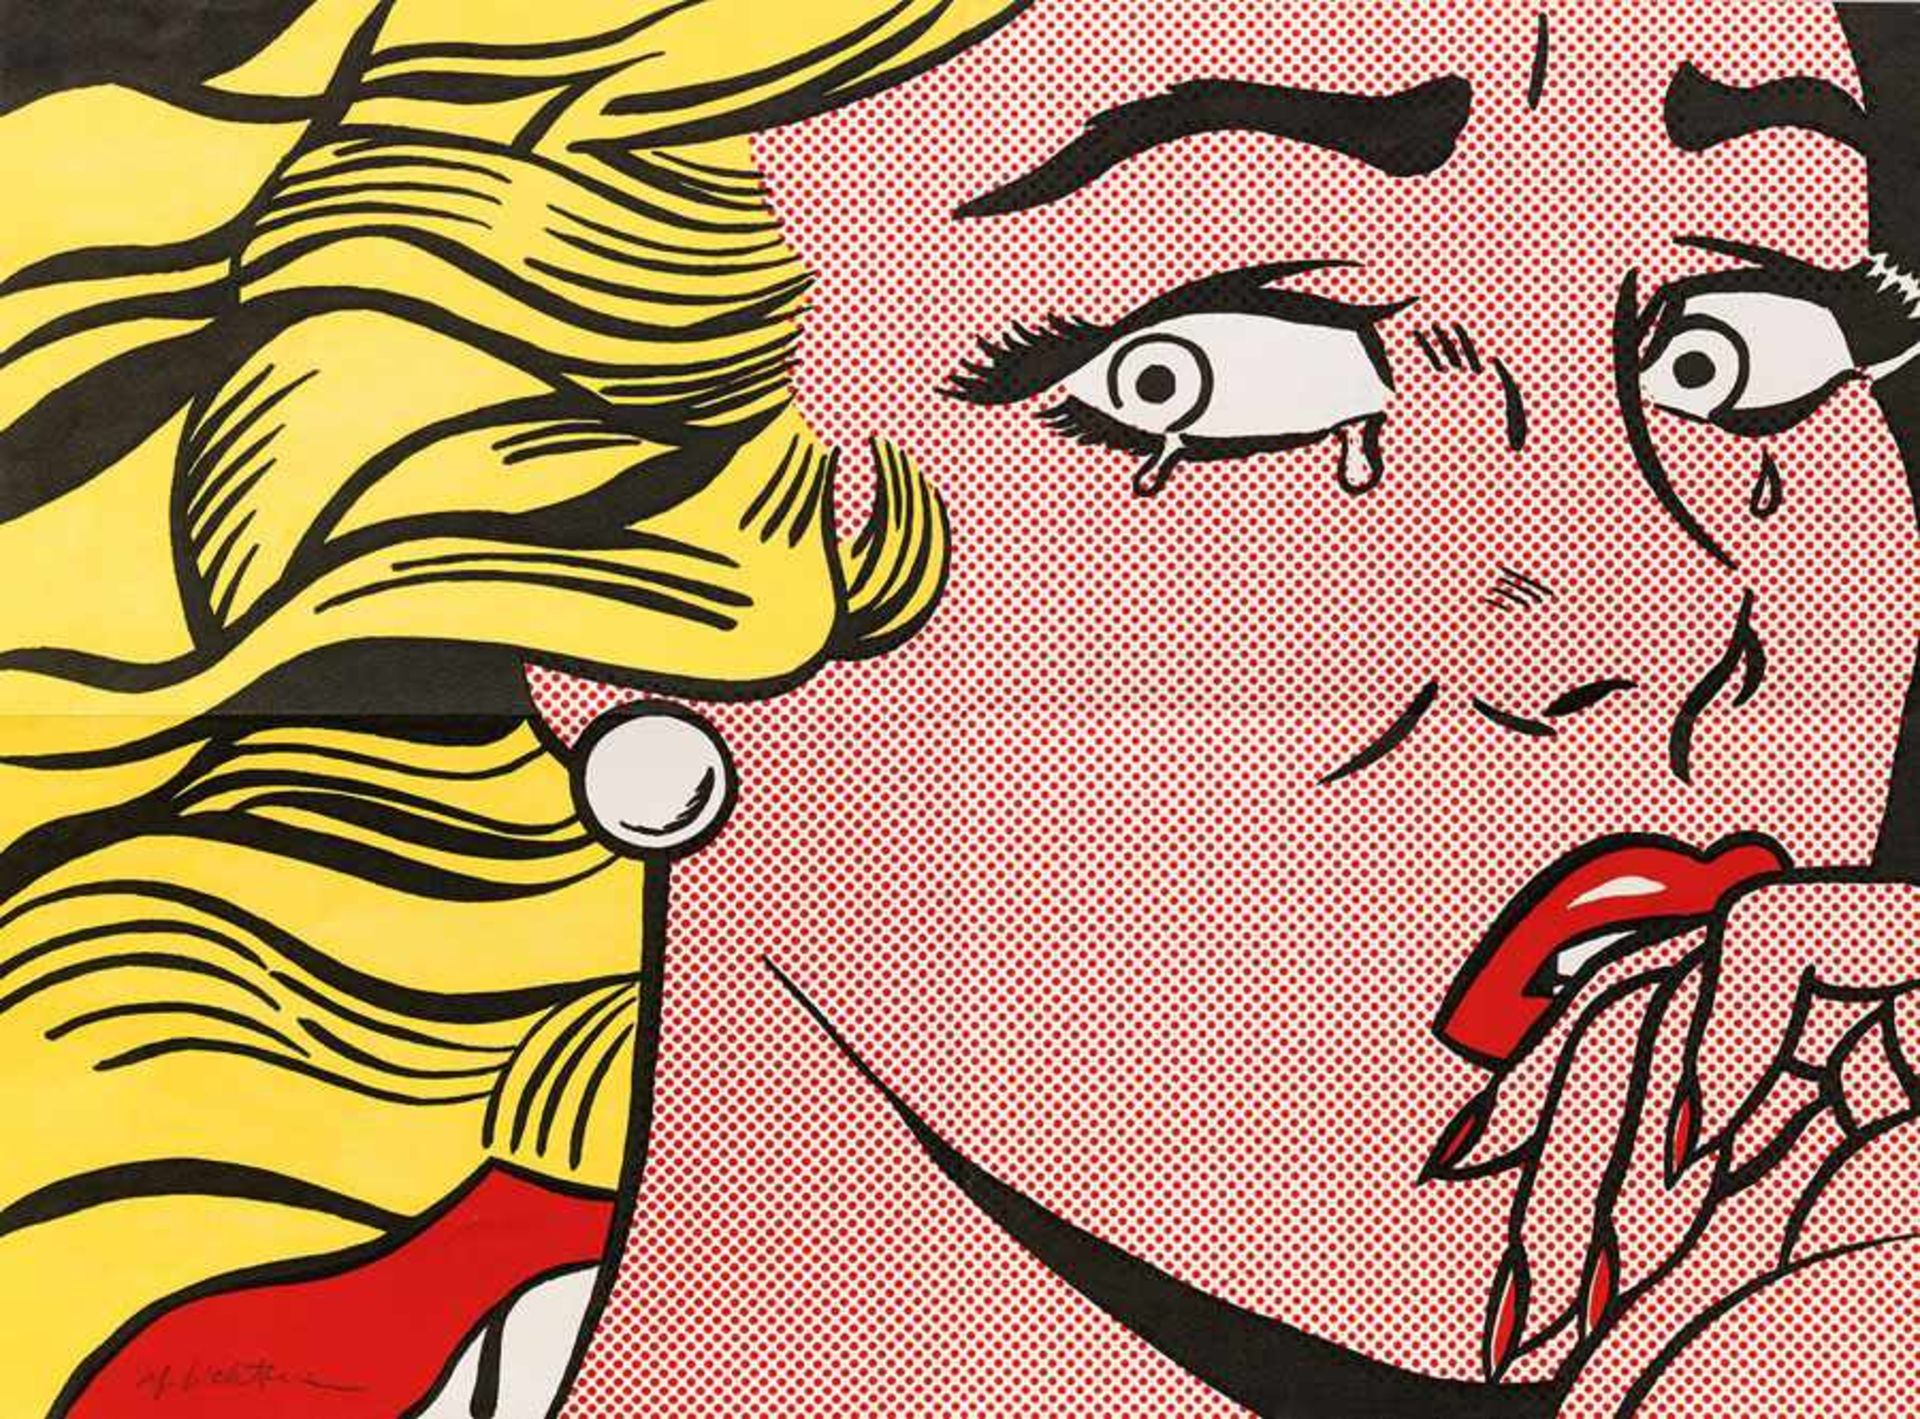 Roy Lichtenstein(1923 New York - 1997 ebenda)"Crying Girl". OriginaltitelFarboffsetlithographie/